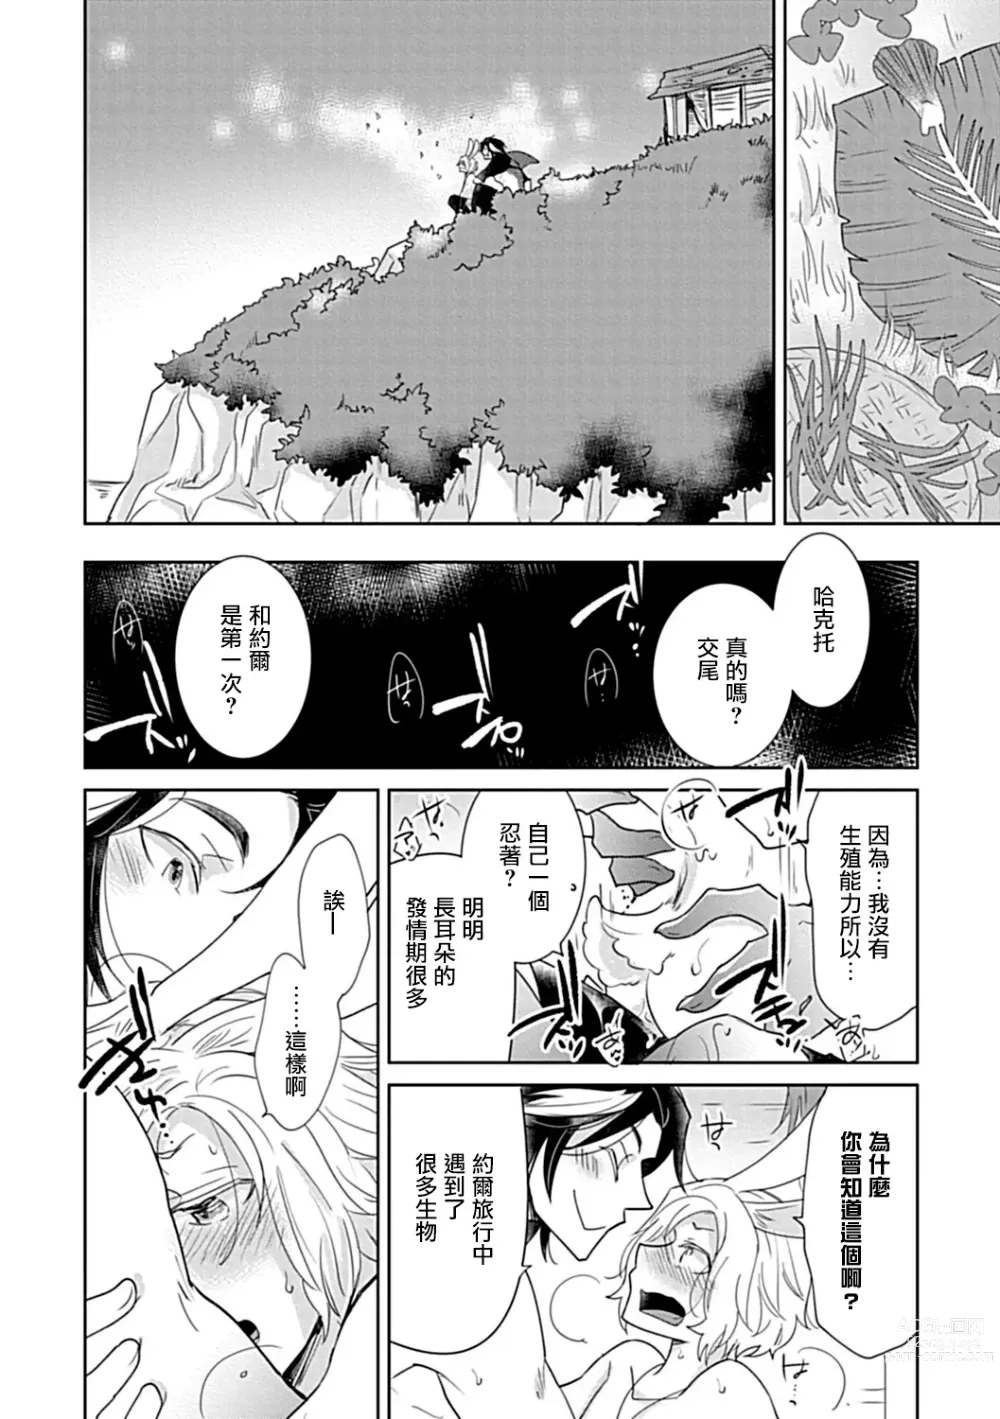 Page 46 of manga 异族婚姻BL